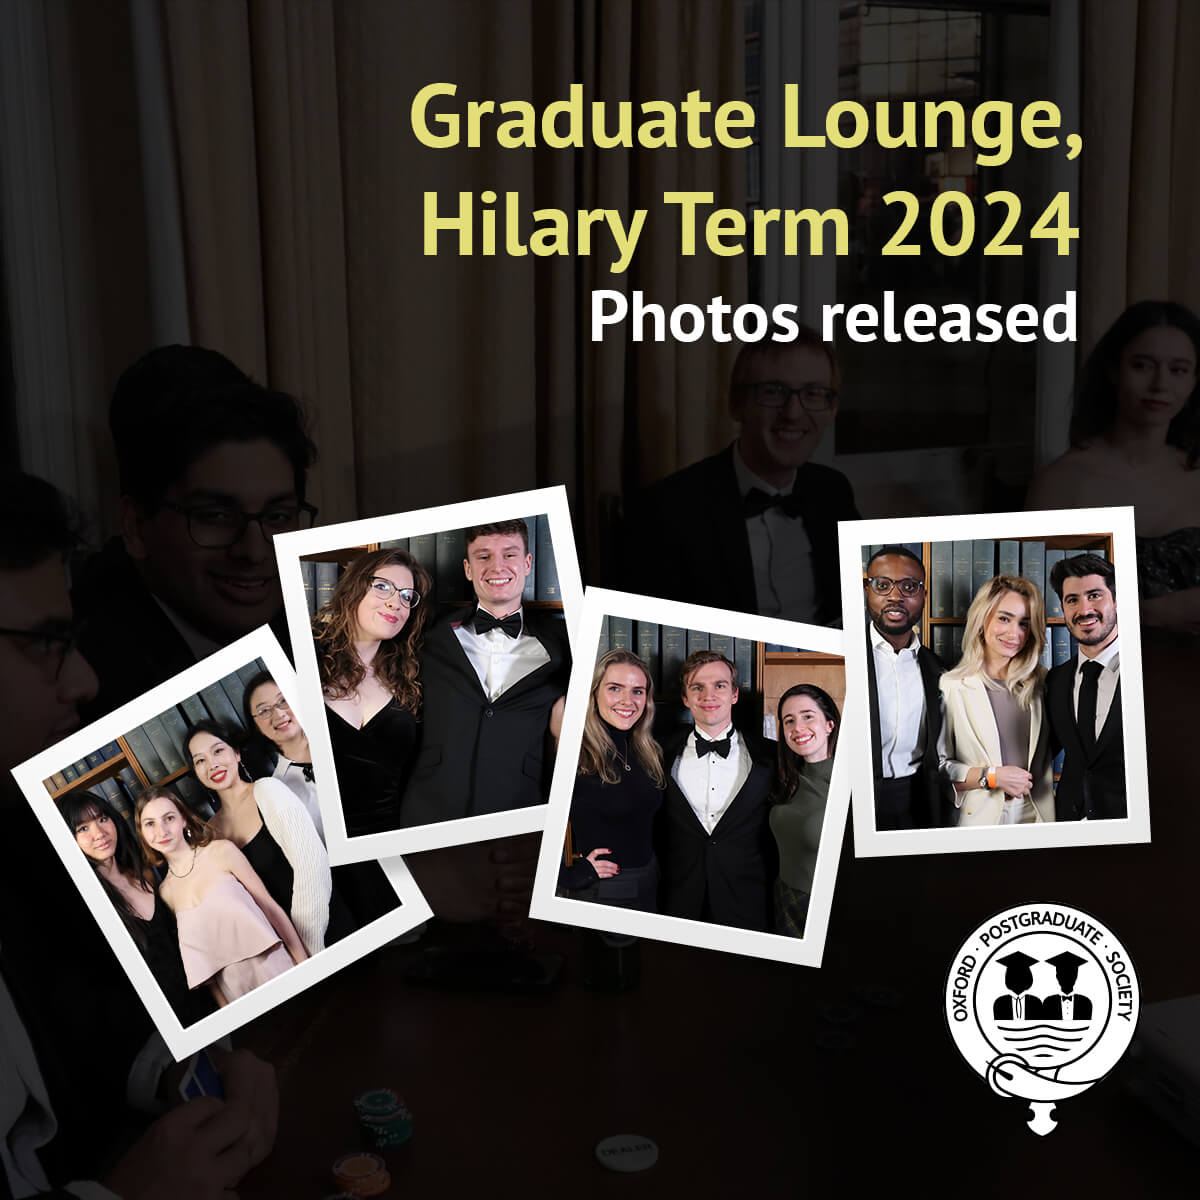 Graduate Lounge, Hilary Term 2024